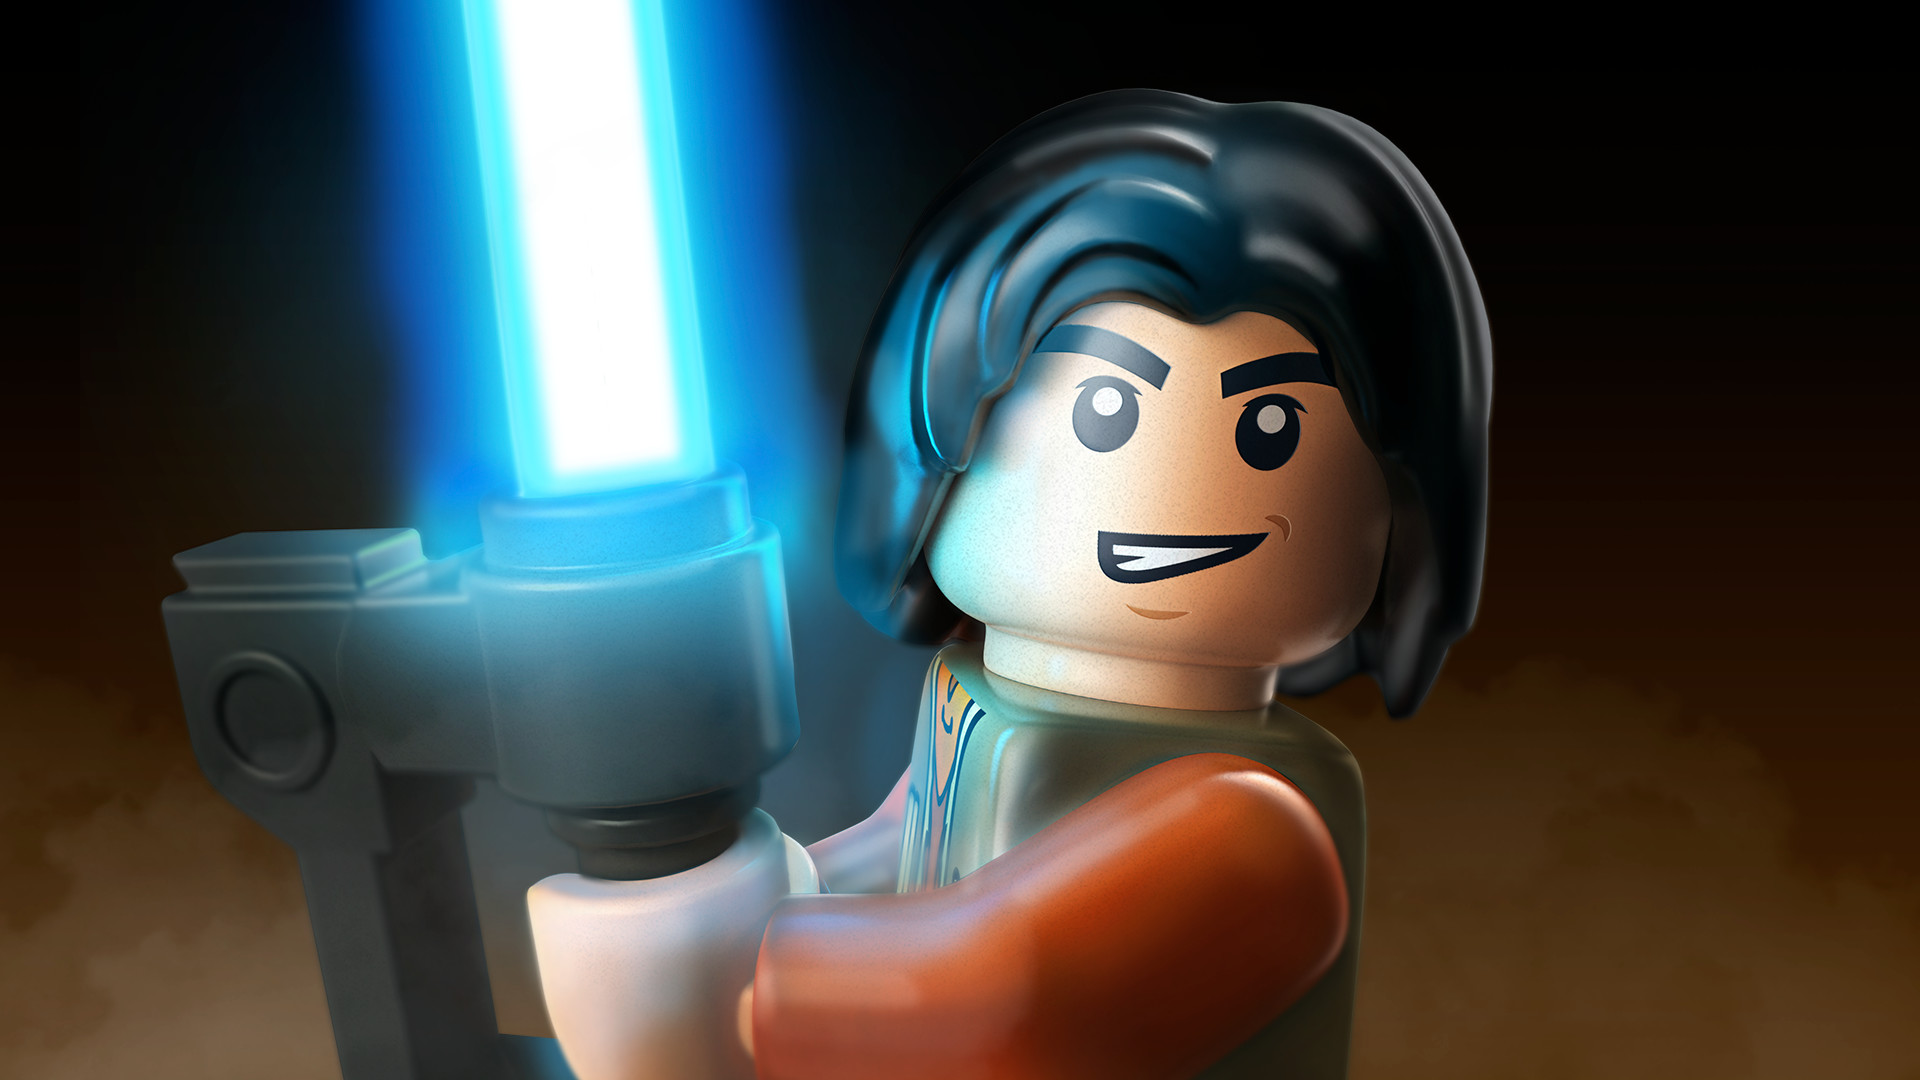 LEGO Star Wars: The Force Awakens - Rebels Character Pack DLC Steam CD Key, $1.68